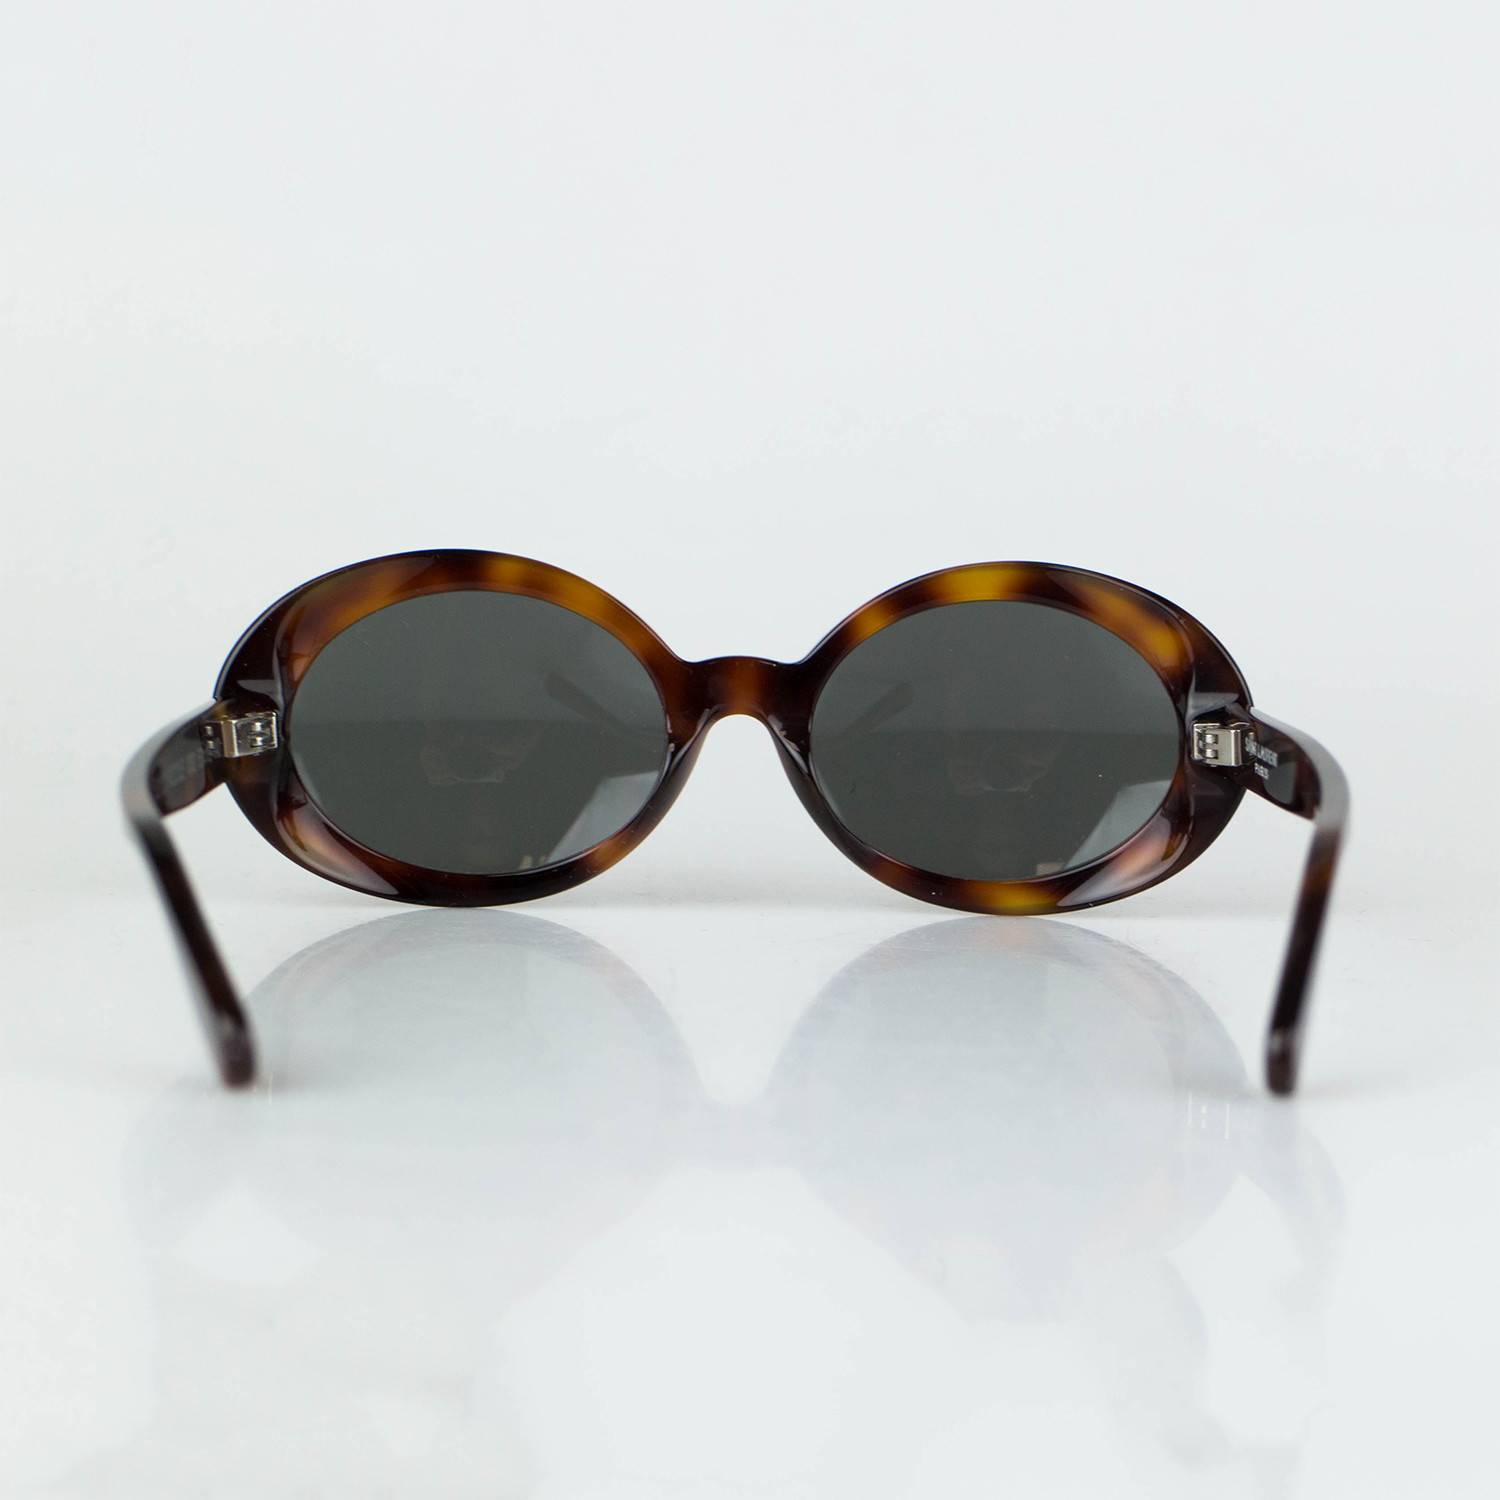 Saint Laurent Paris Oval Sunglasses Tortoise Designer Women S Accessories Touch Of Modern